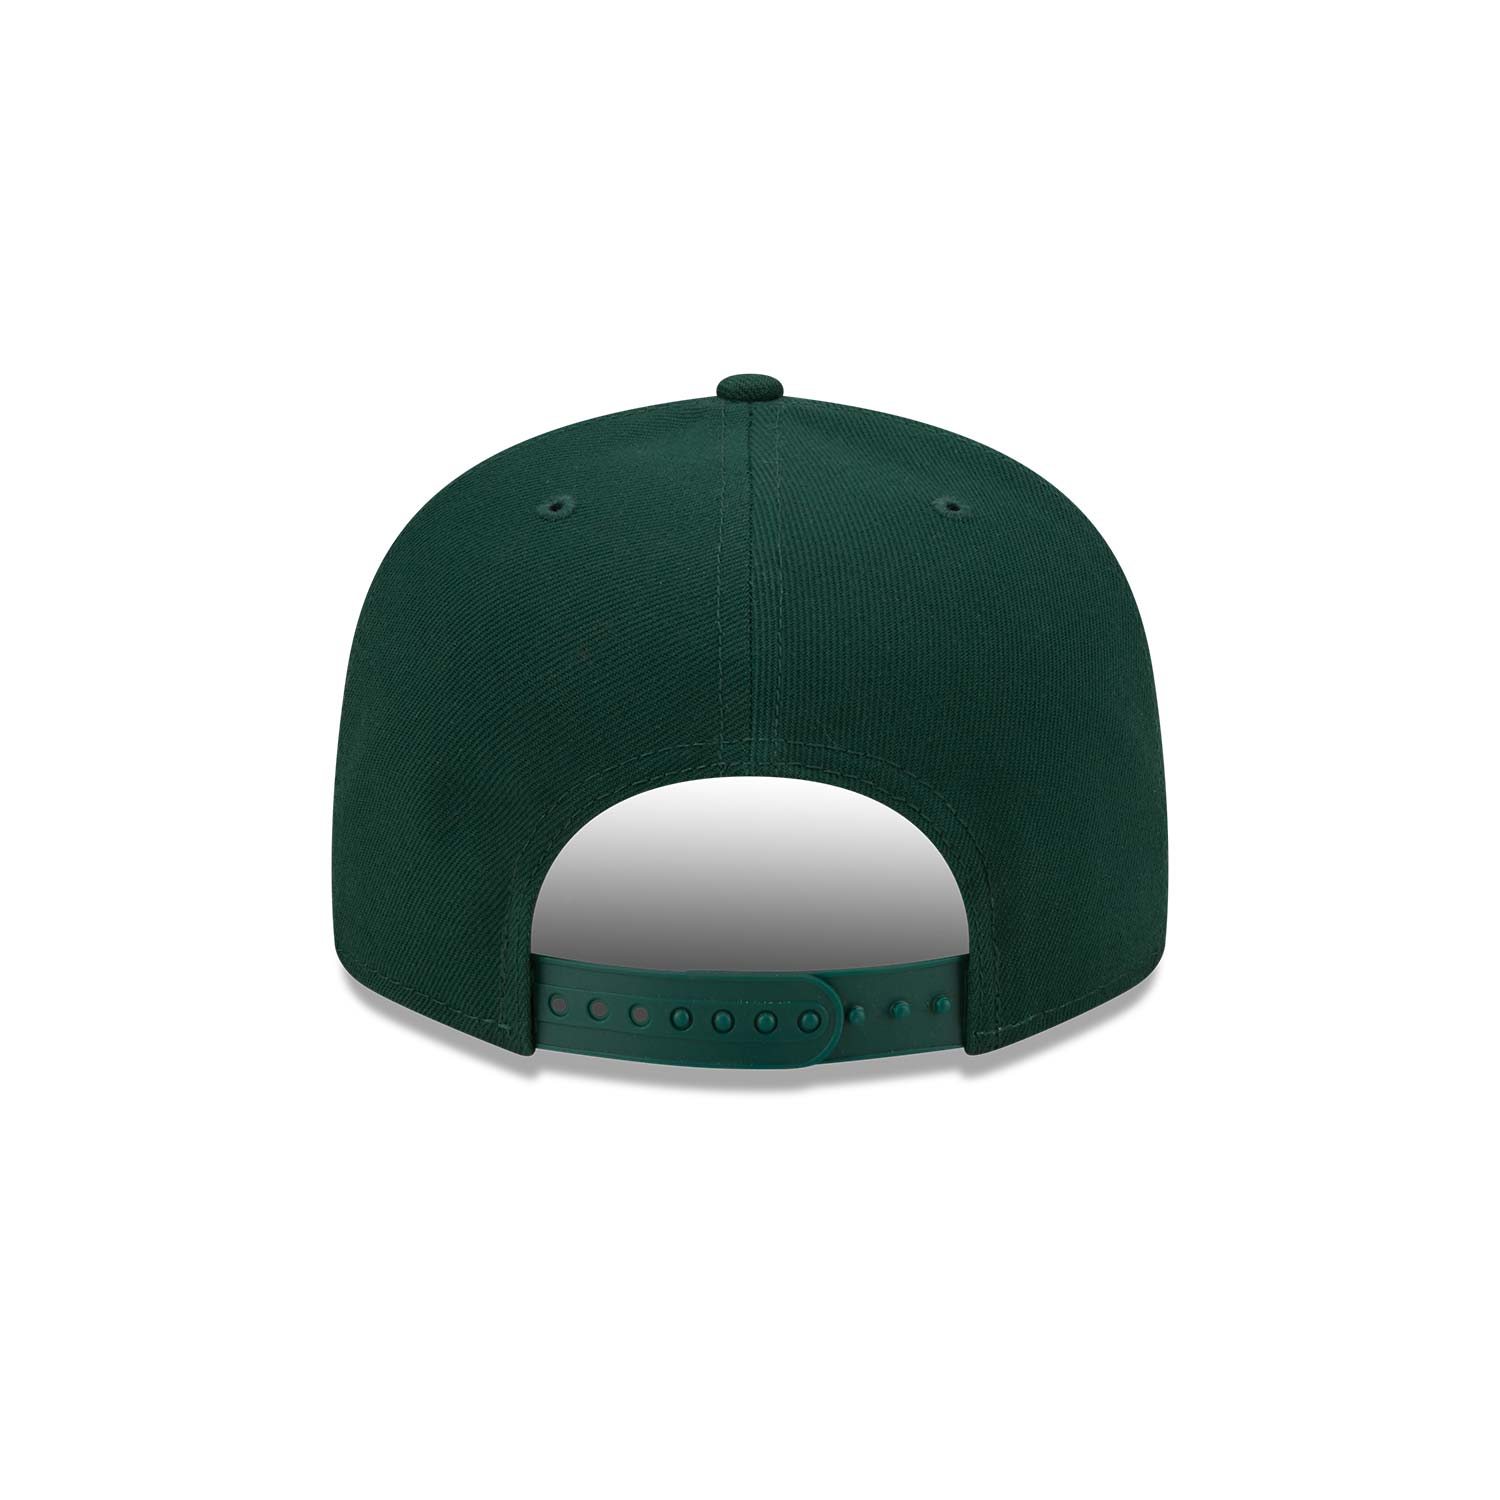 New York Yankees Apple Dark Green 9FIFTY Snapback Cap